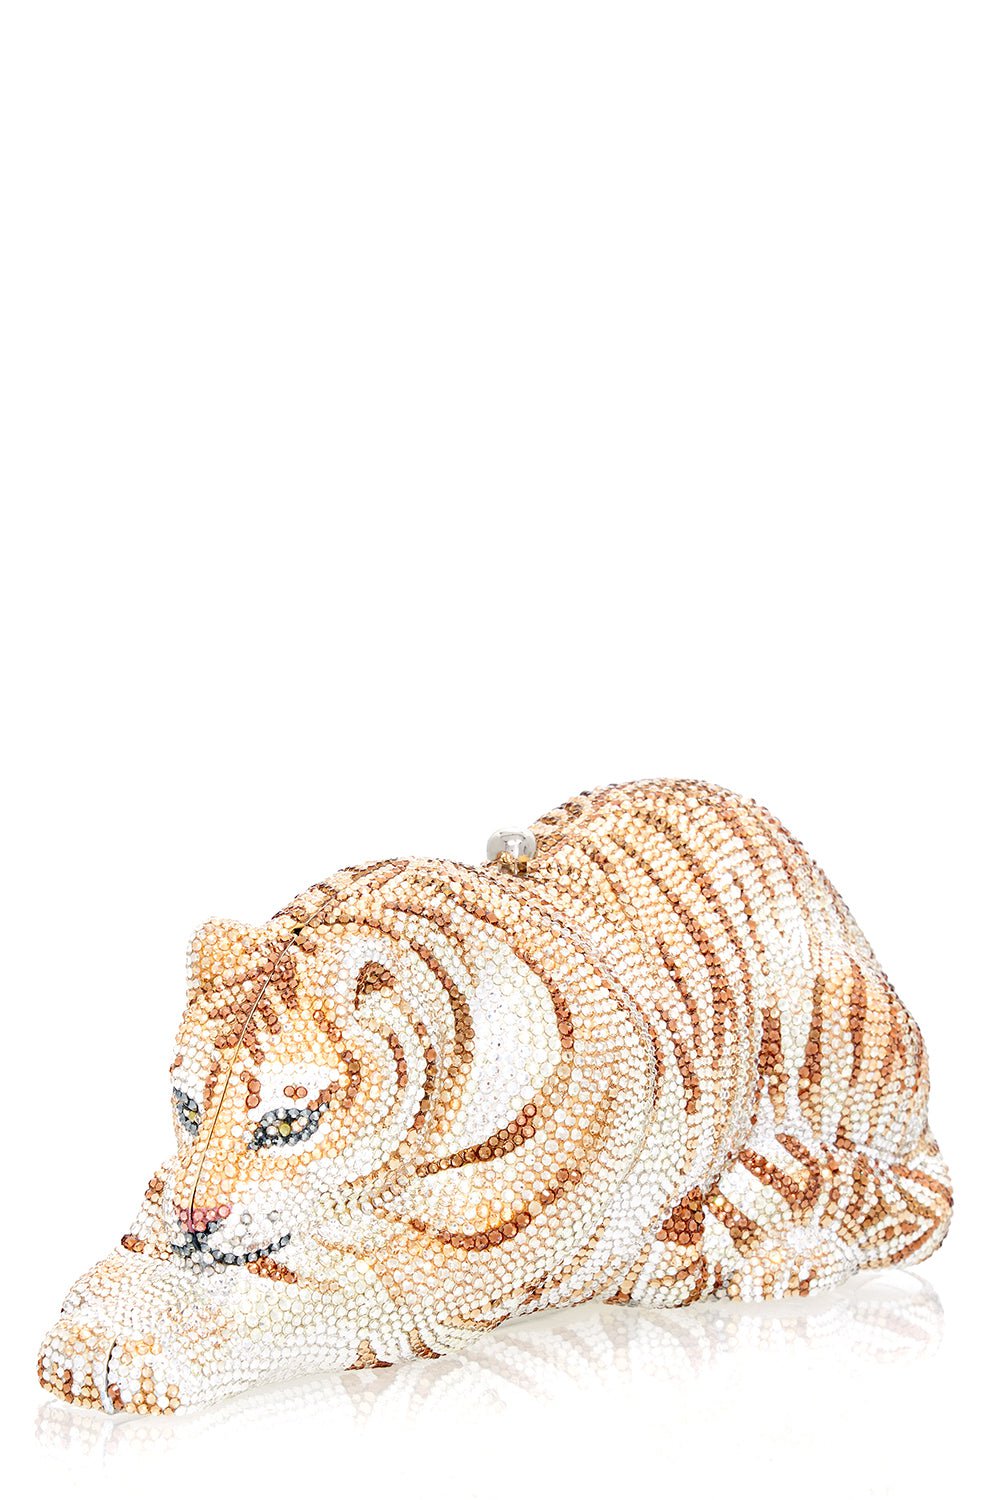 JUDITH LEIBER-Wildcat Golden Cub Bag-SILVER BLONDE MULTI